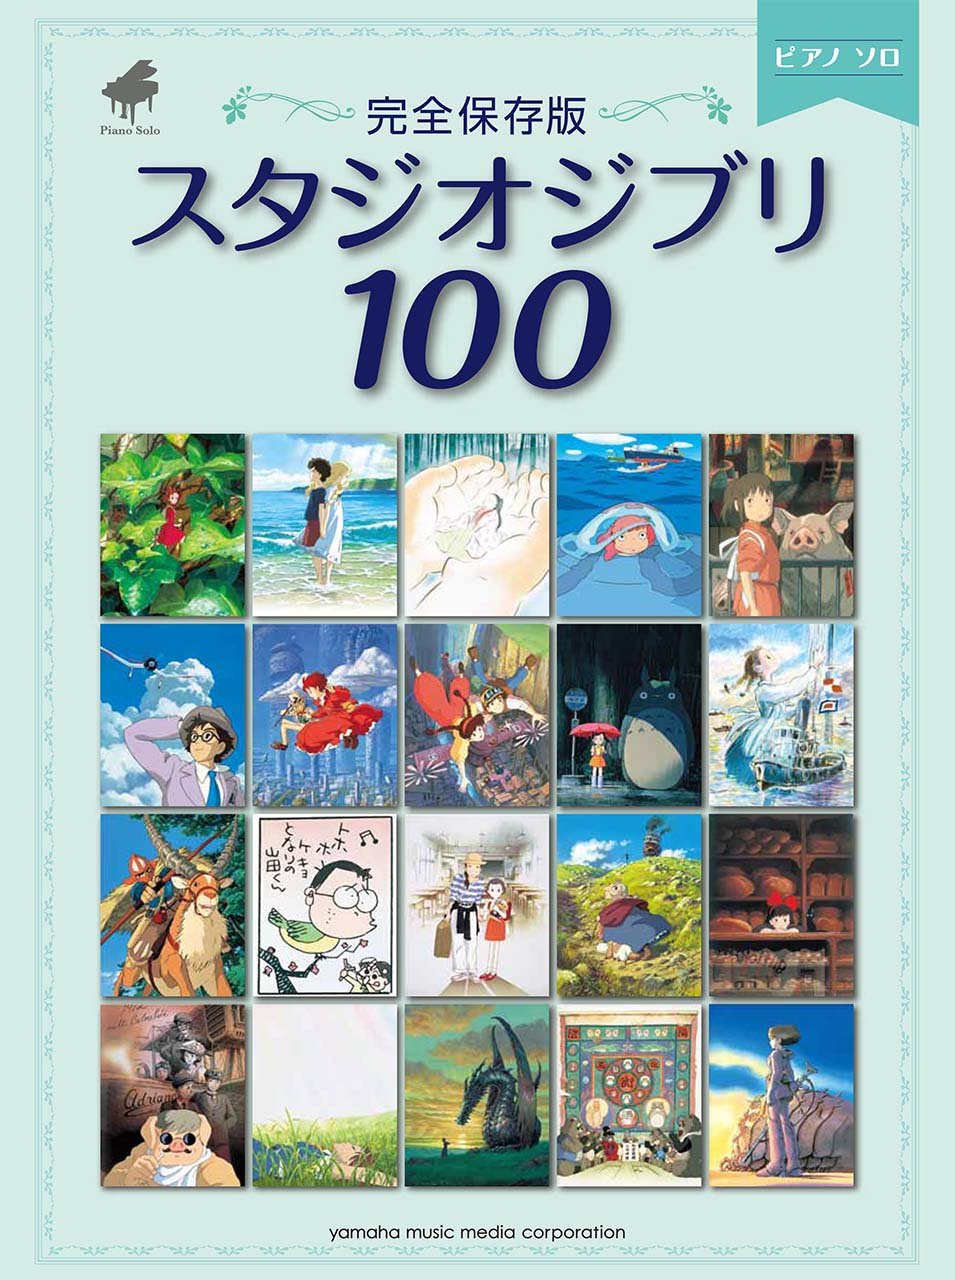 Mua Studio Ghibli piano solo (full storage Edition) 100 trên Amazon Mỹ  chính hãng 2023 | Giaonhan247